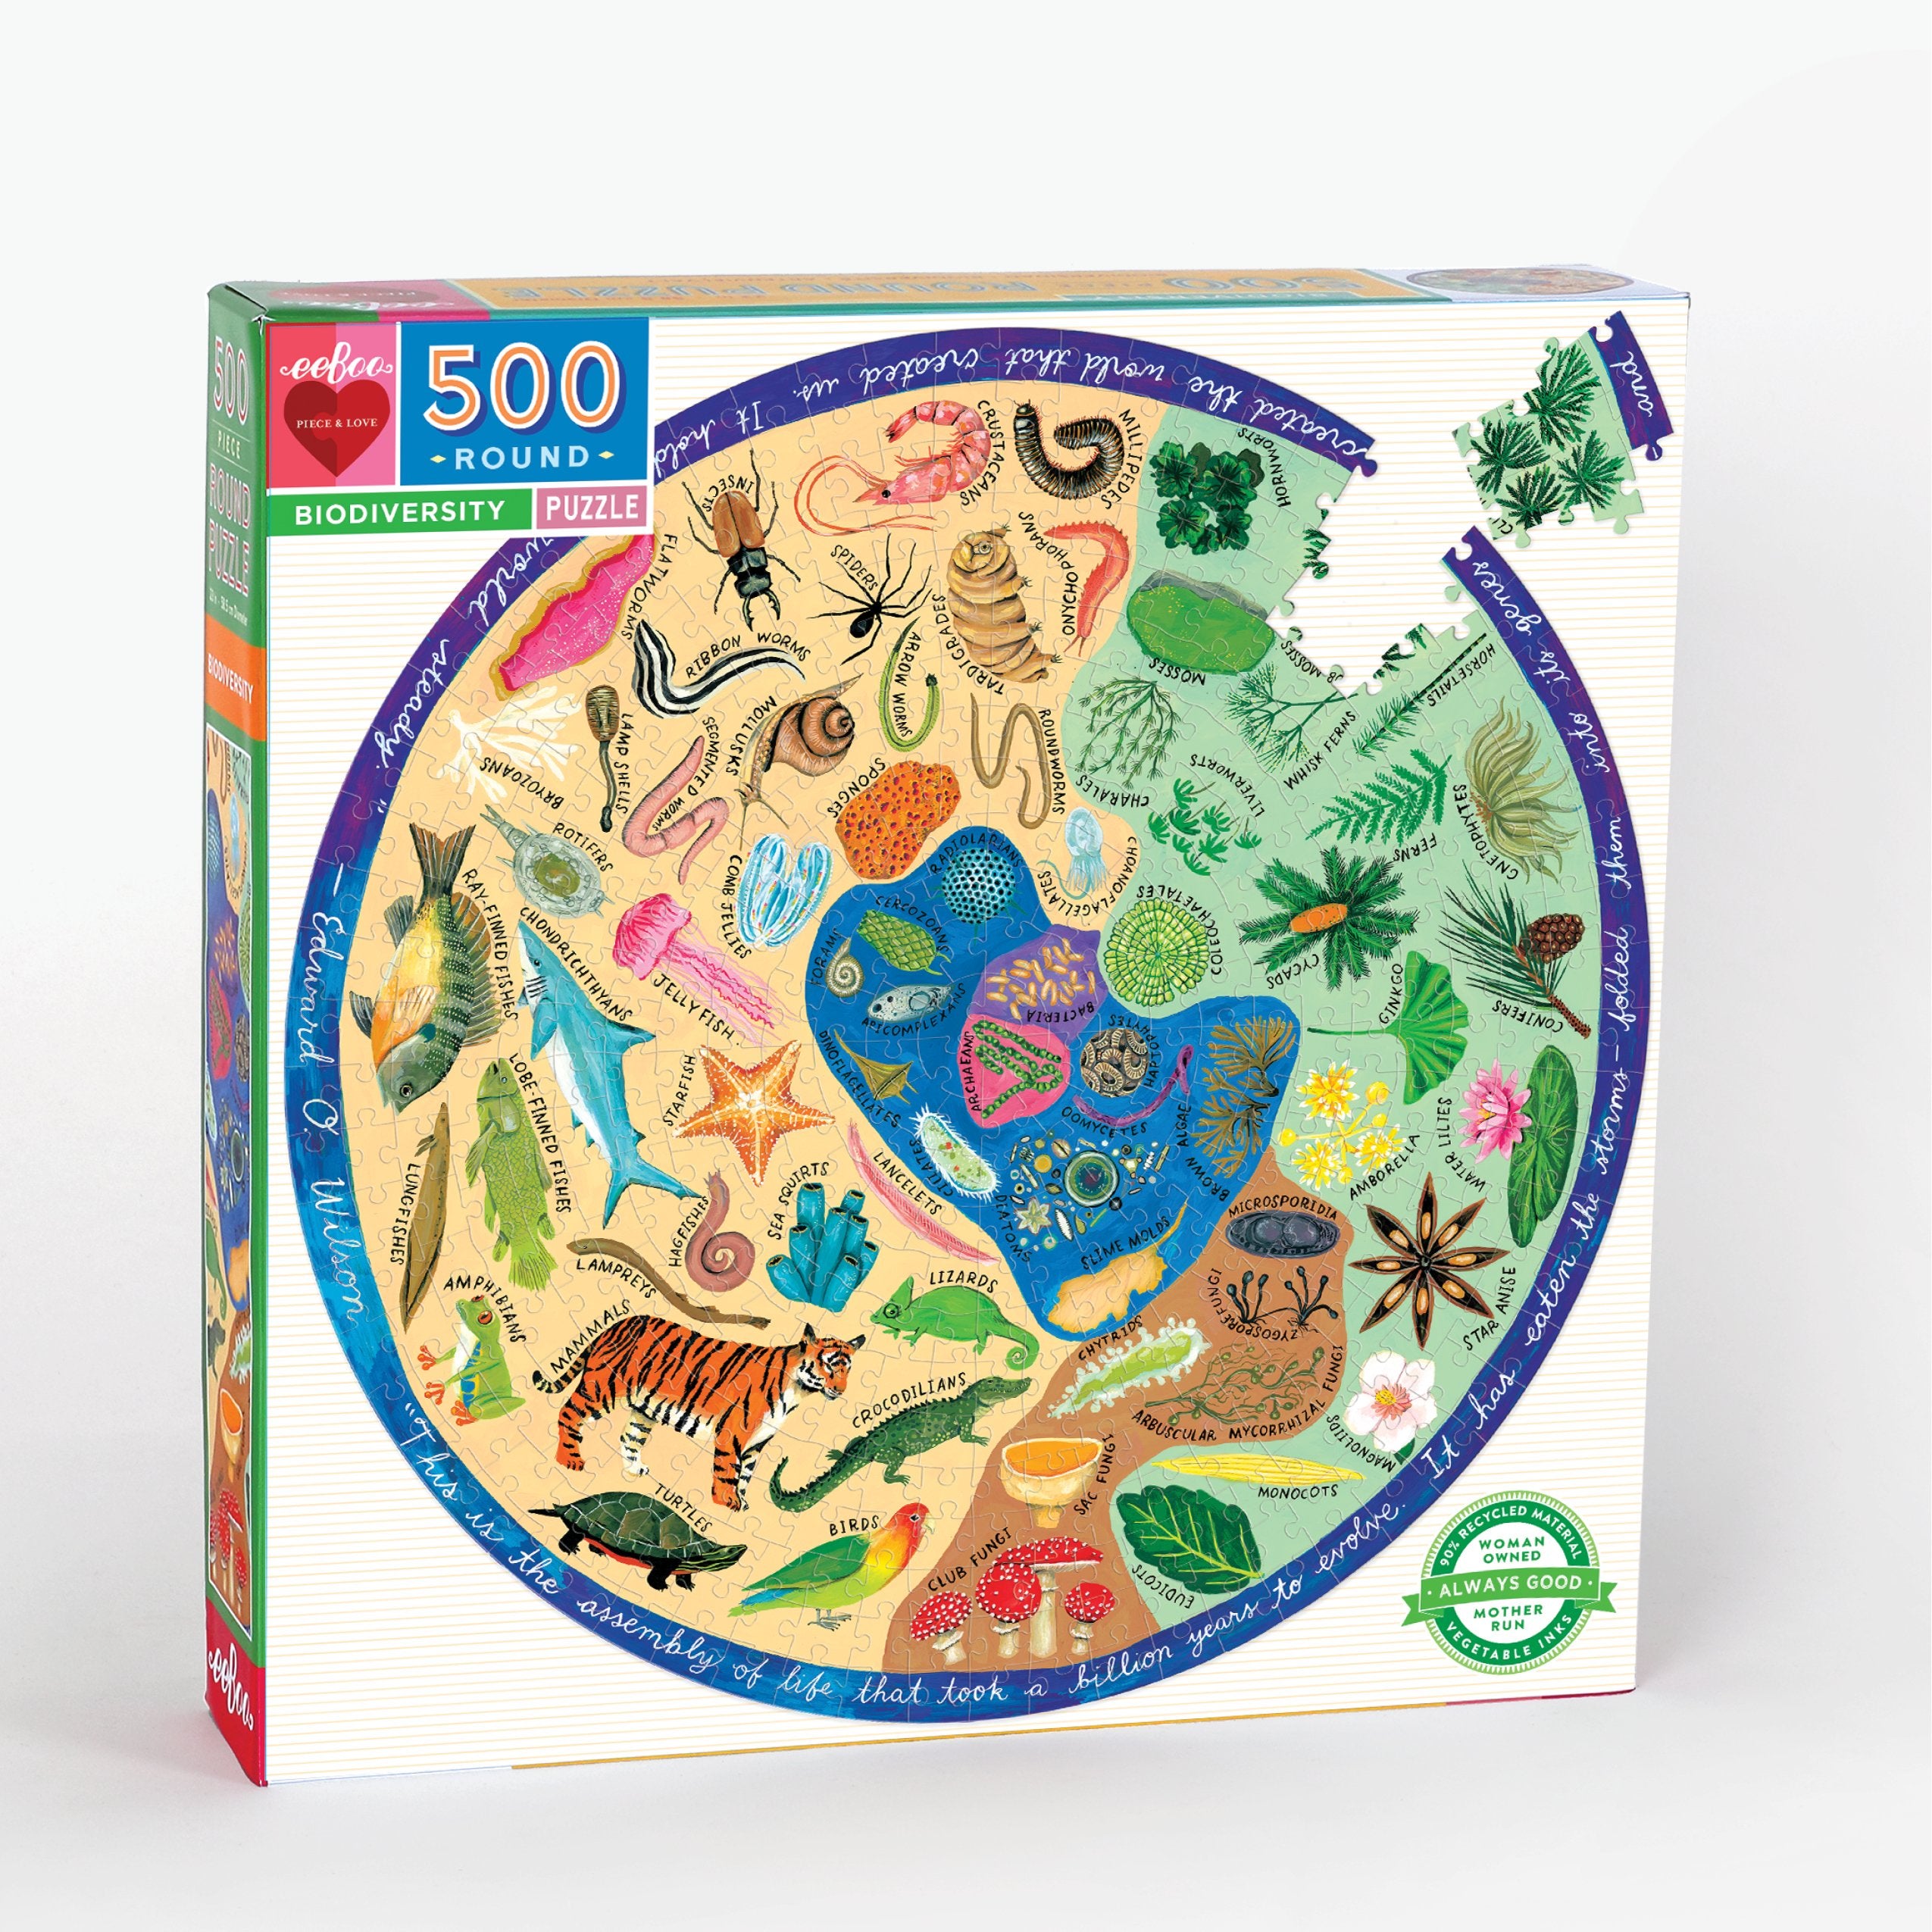 Biodiversity 500 Piece Round Puzzle    